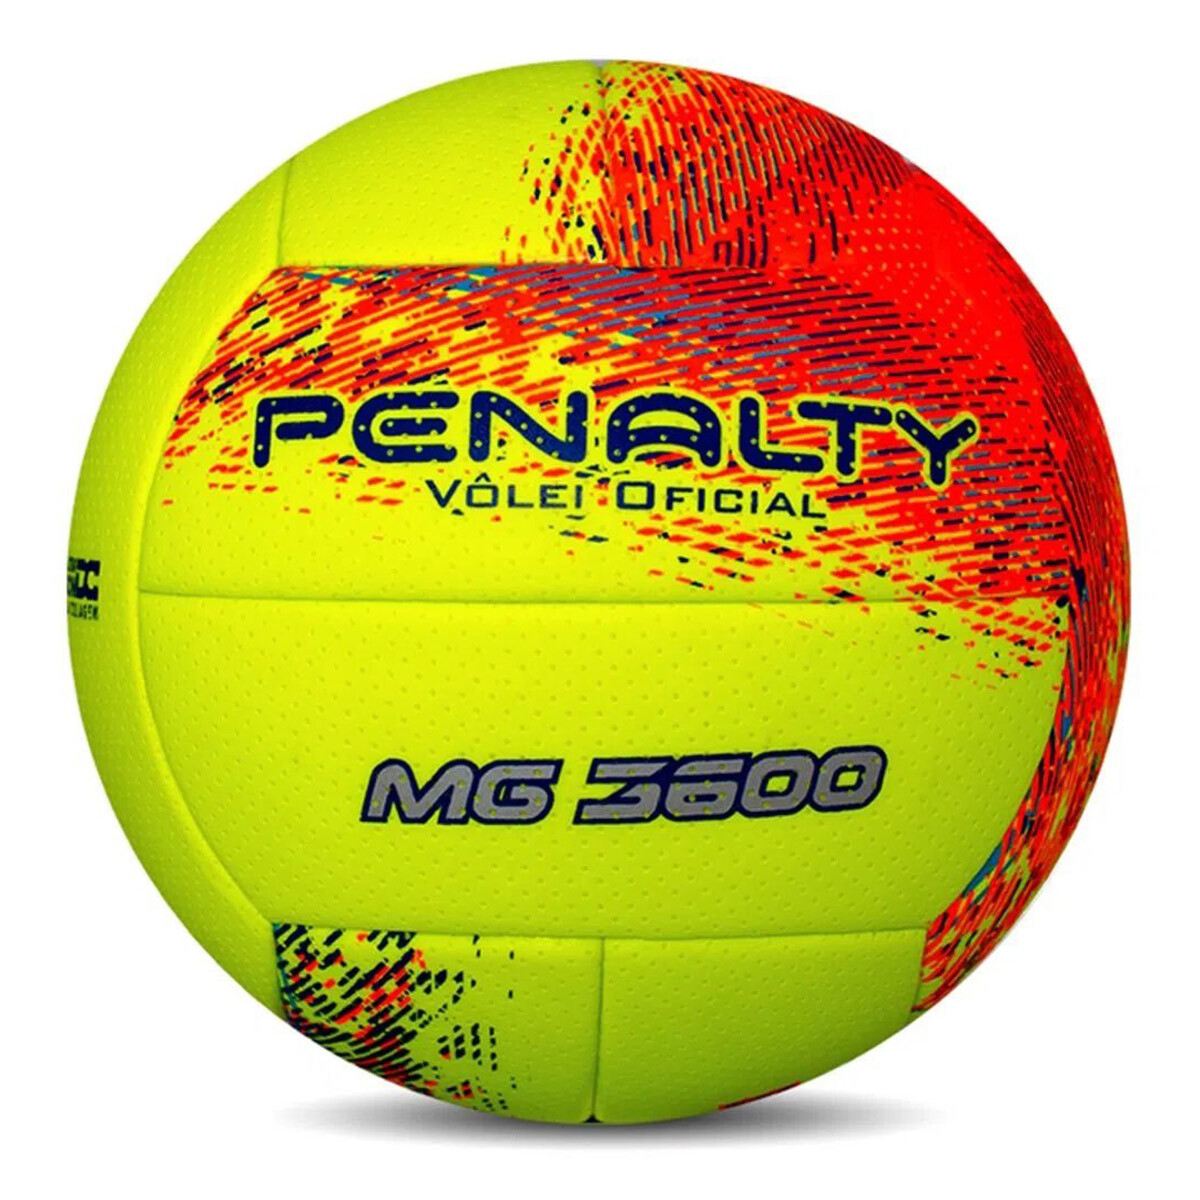 Pelota Penalty De Volleyball N5 Oficial 3600 Voley - Amarillo 